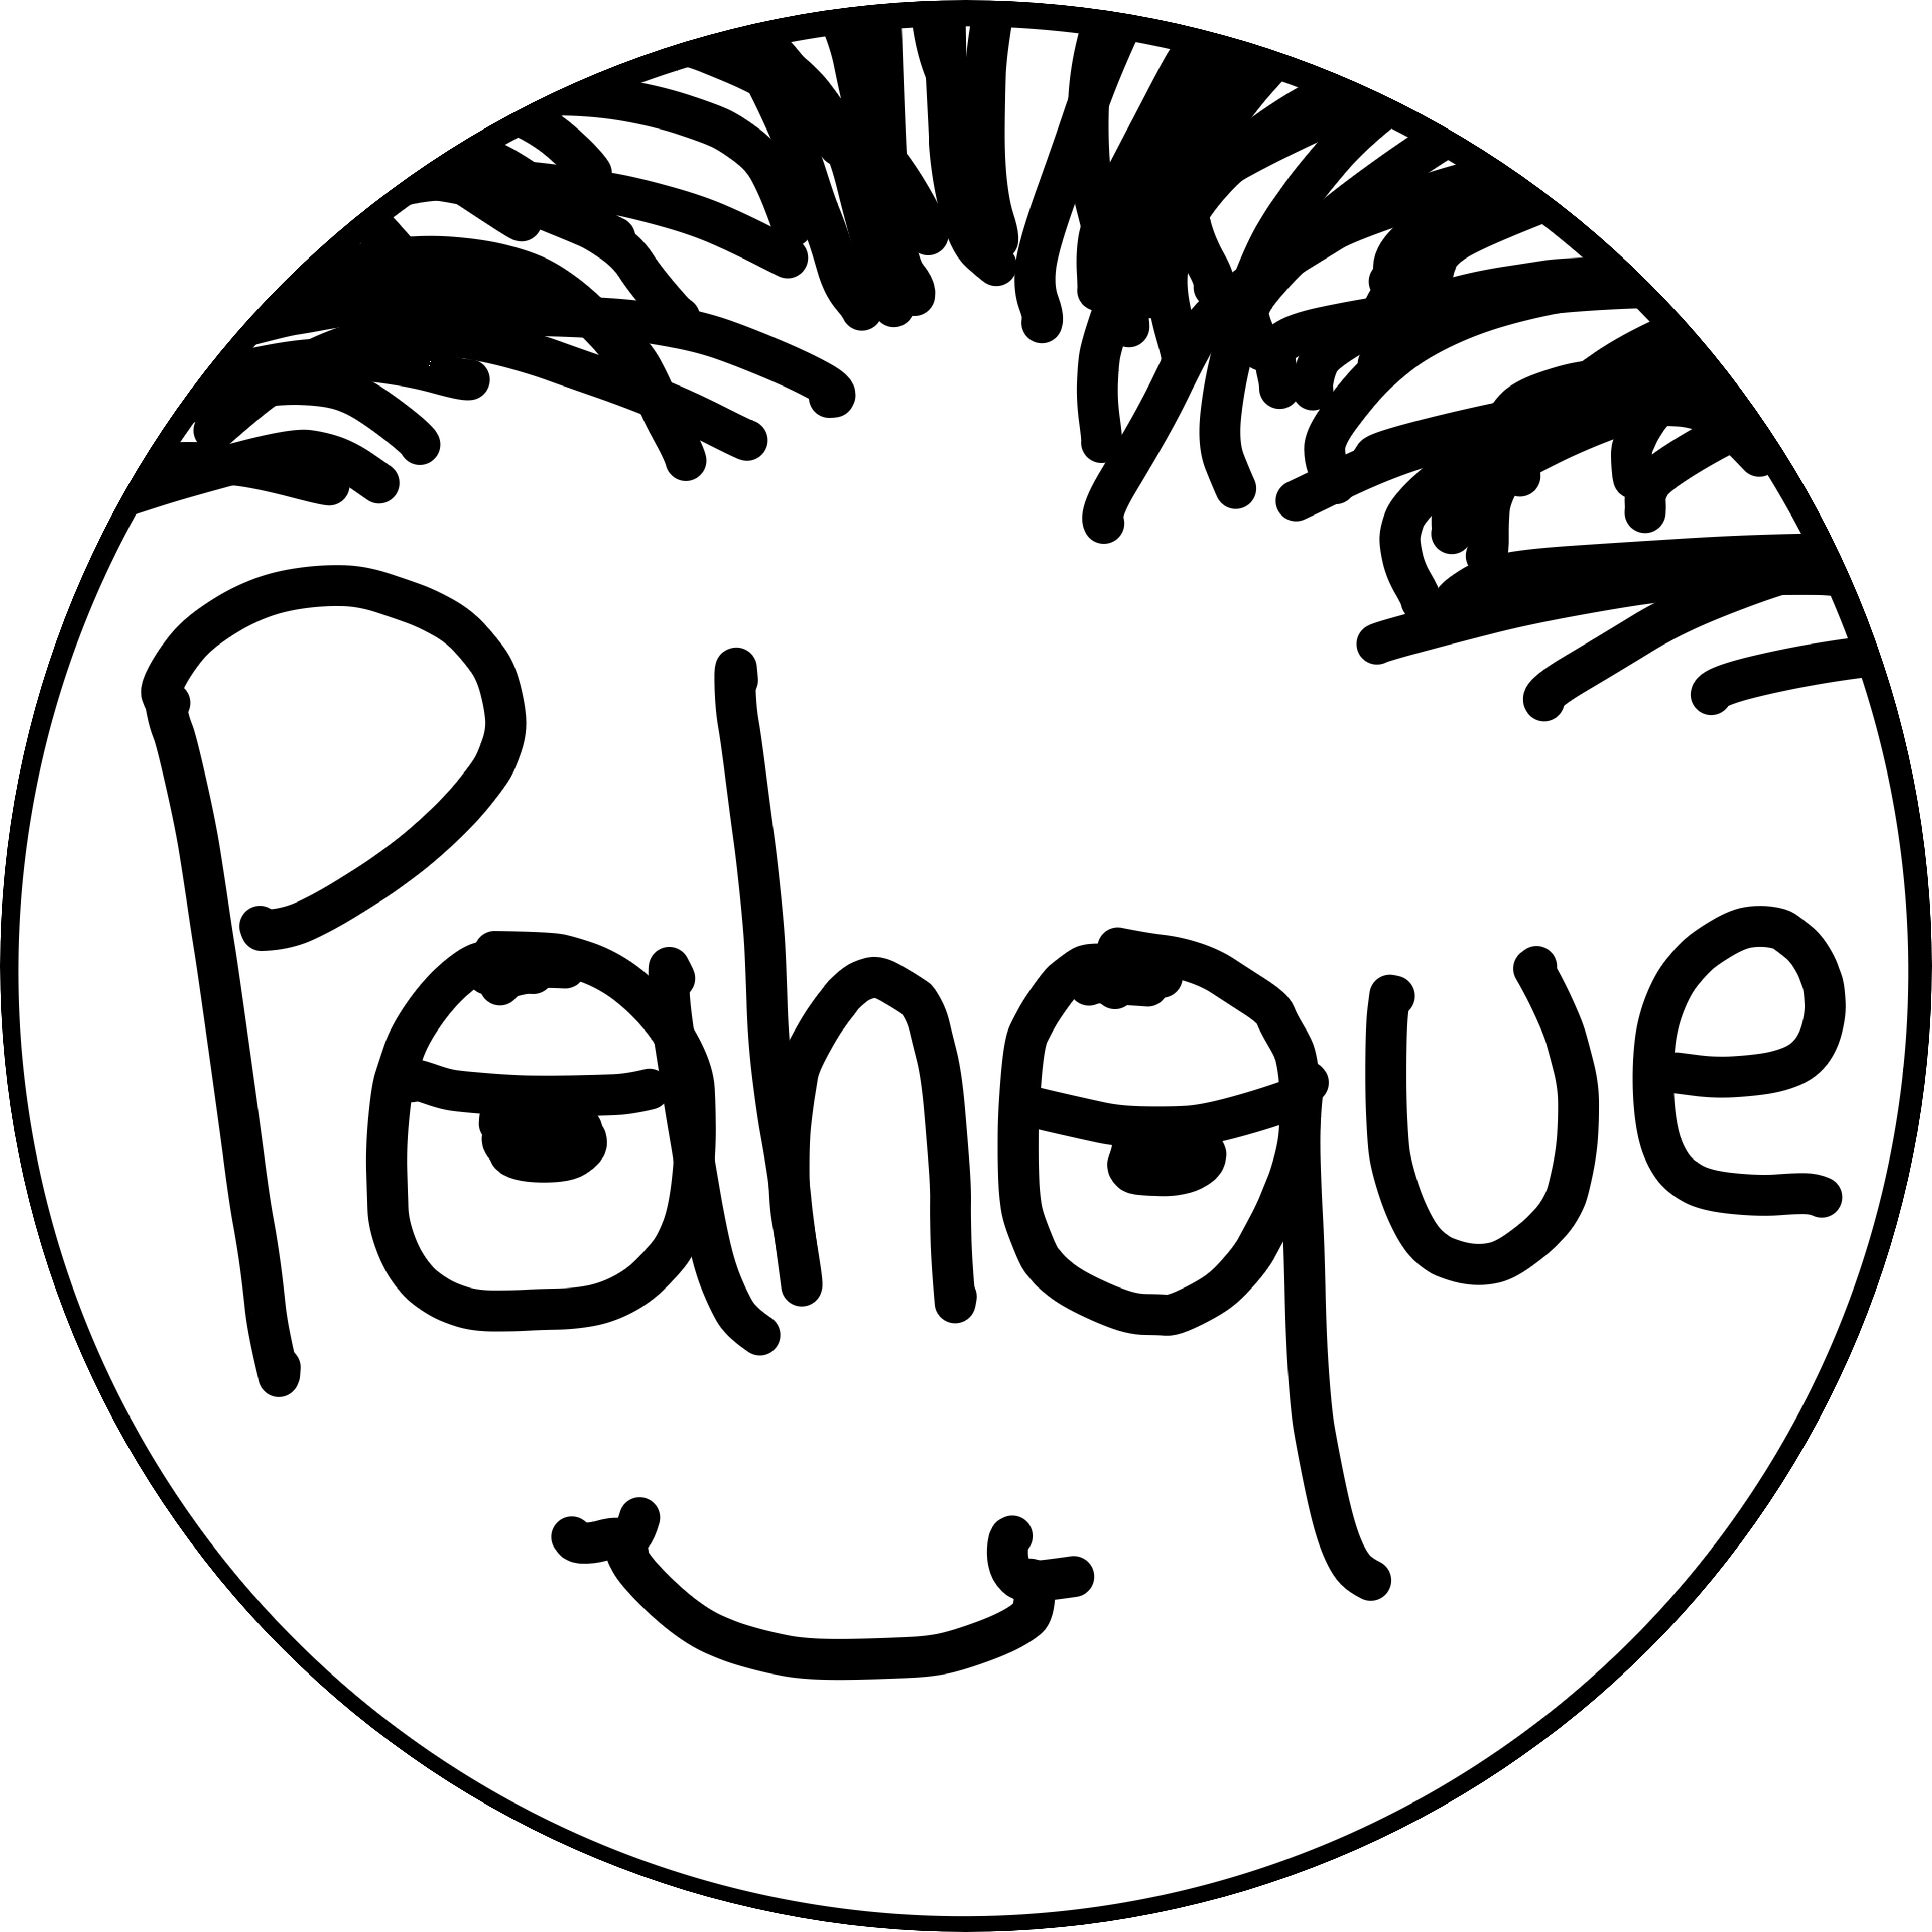 Pahque